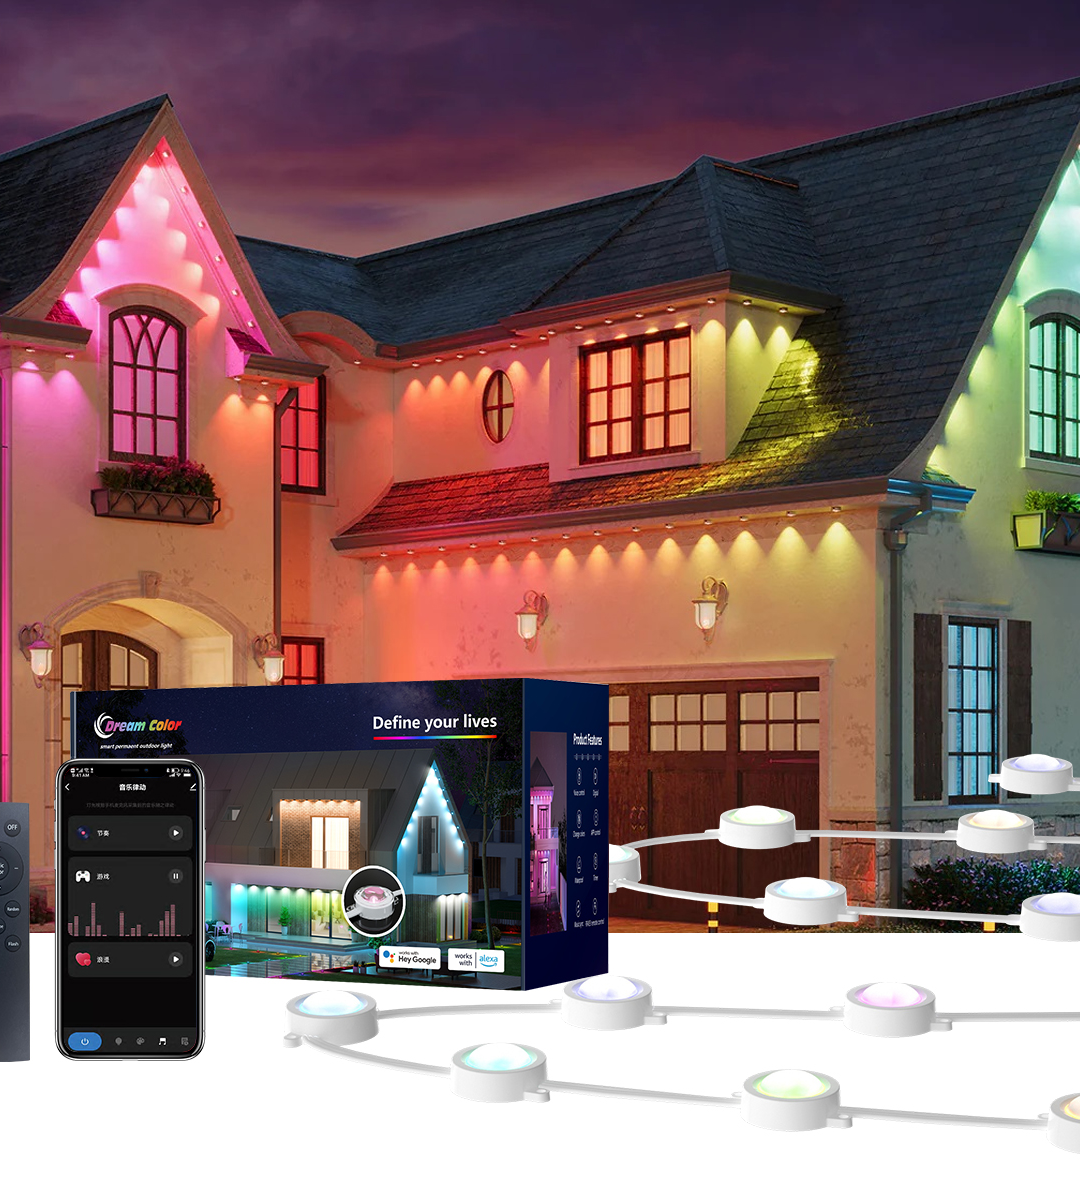 CL LIGHTING's Smart Holiday Lights: Elevating Residential Celebrations